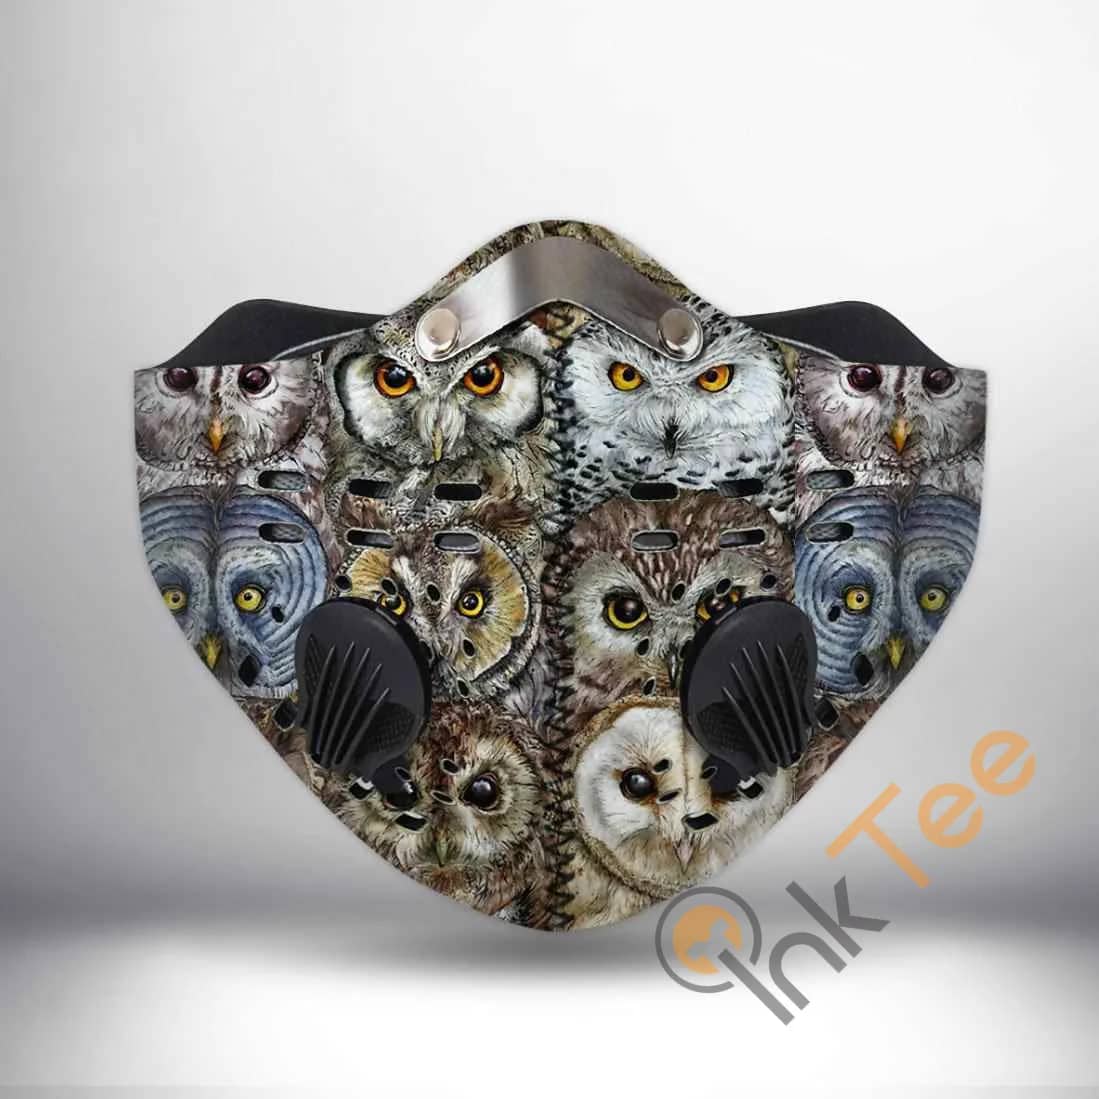 Owl Filter Activated Carbon Pm 2.5 Fm Sku 508 Face Mask